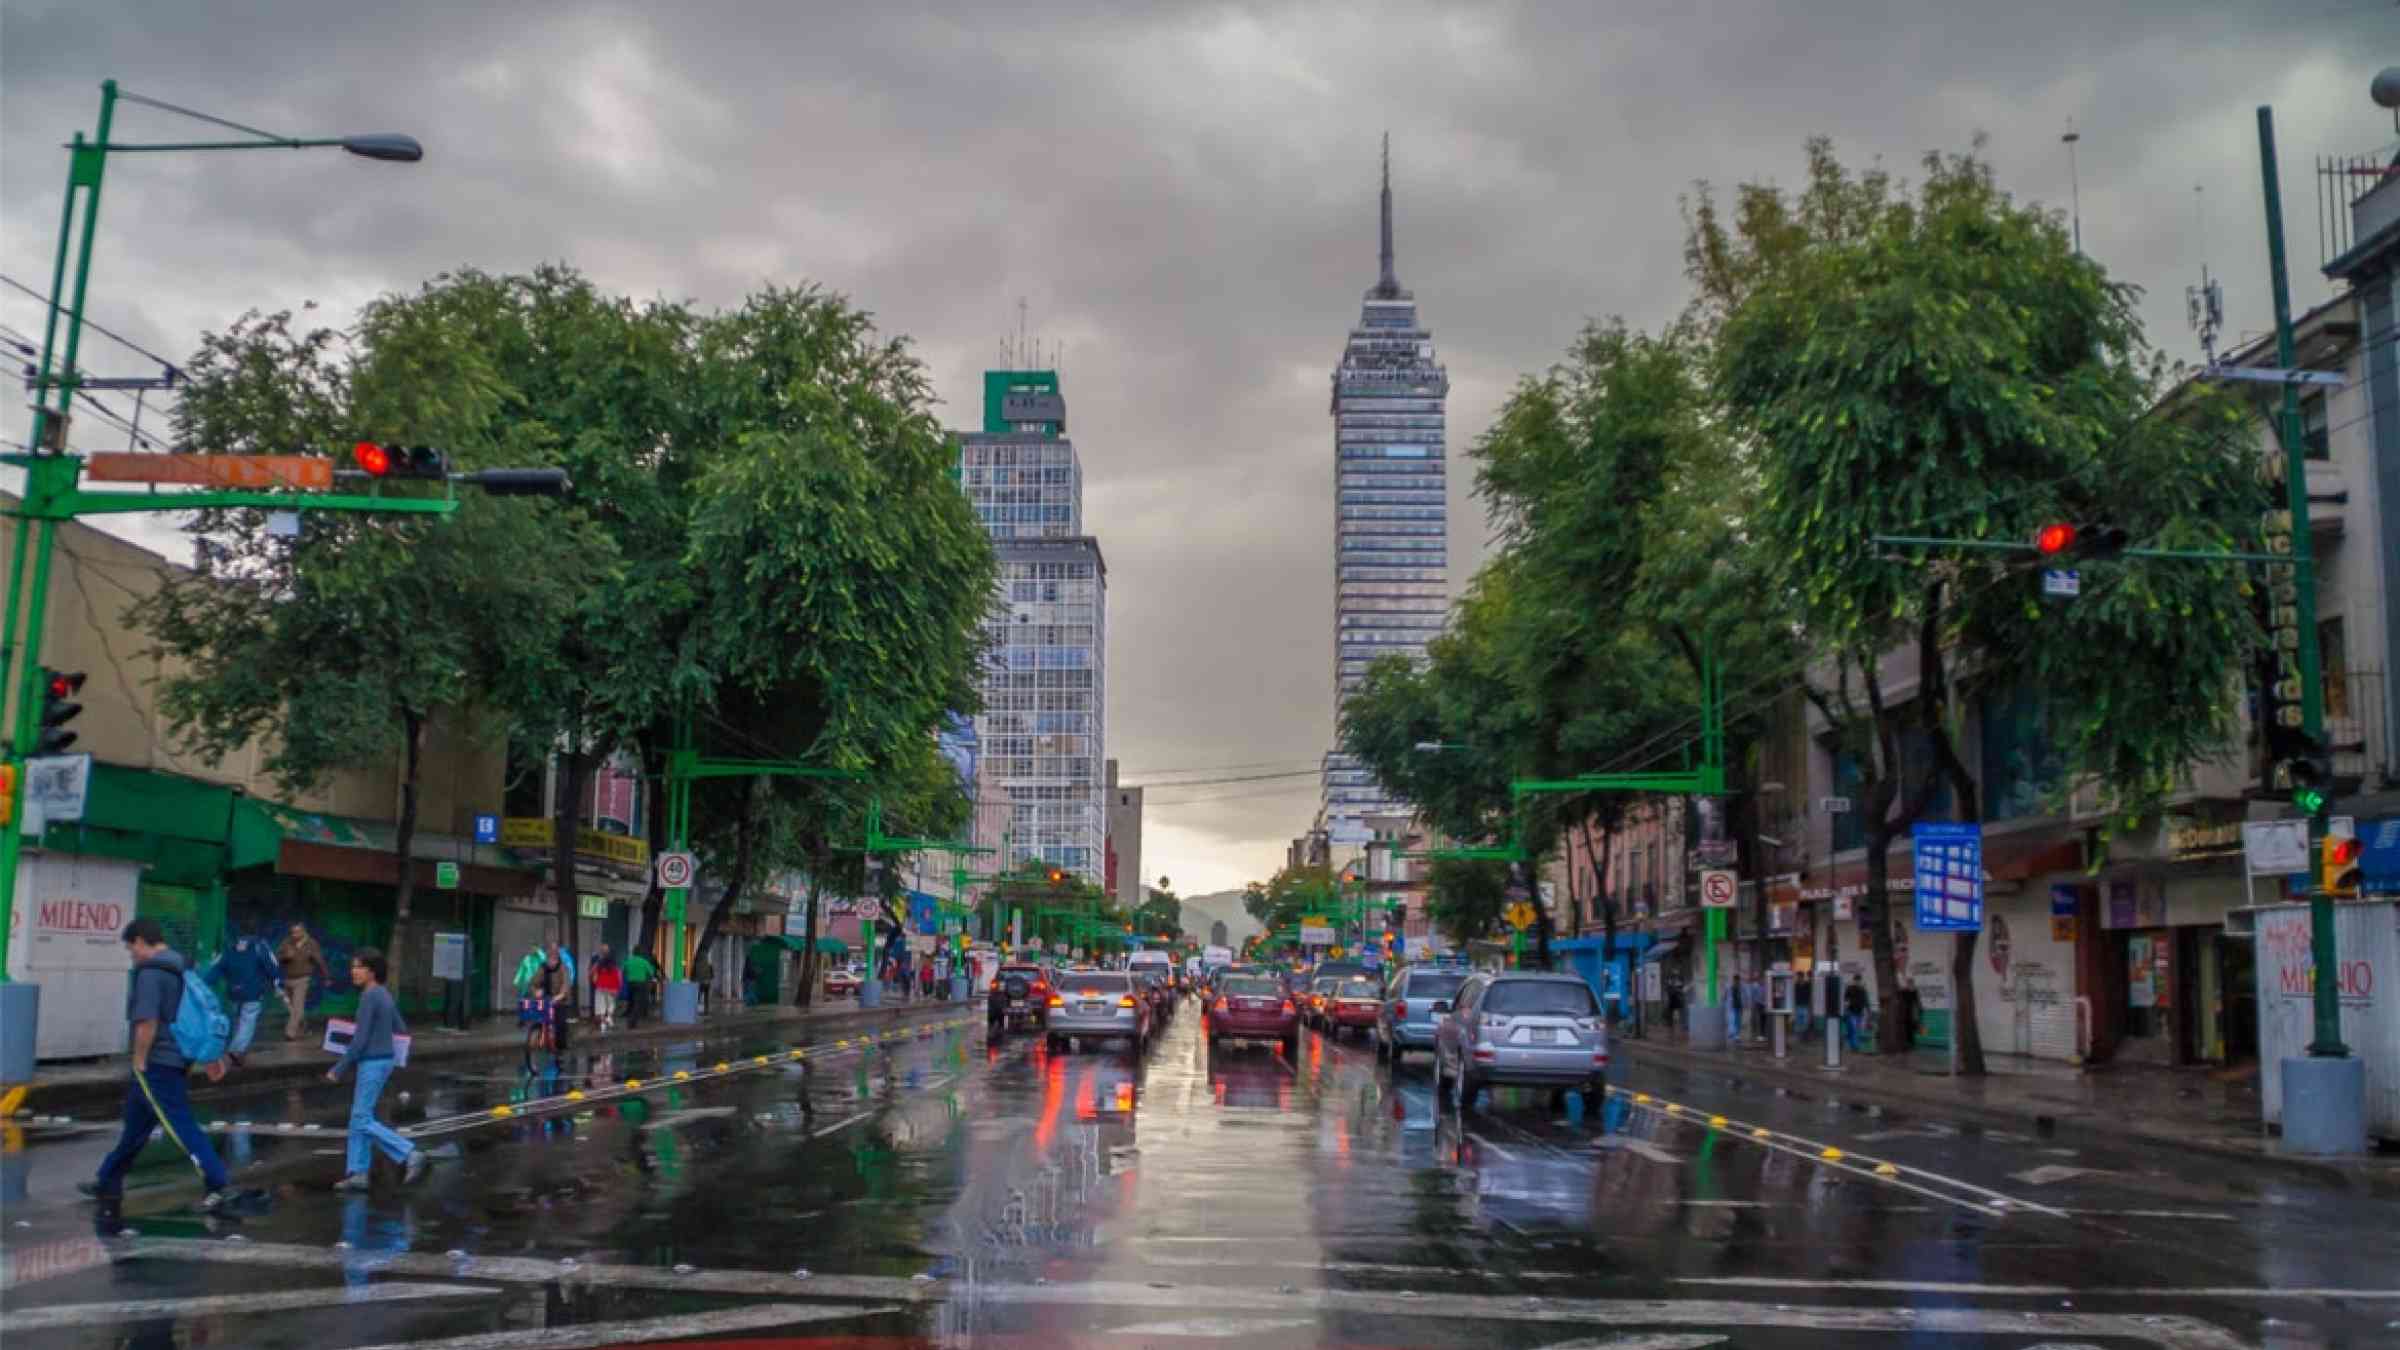 Stormy sky above Mexico City